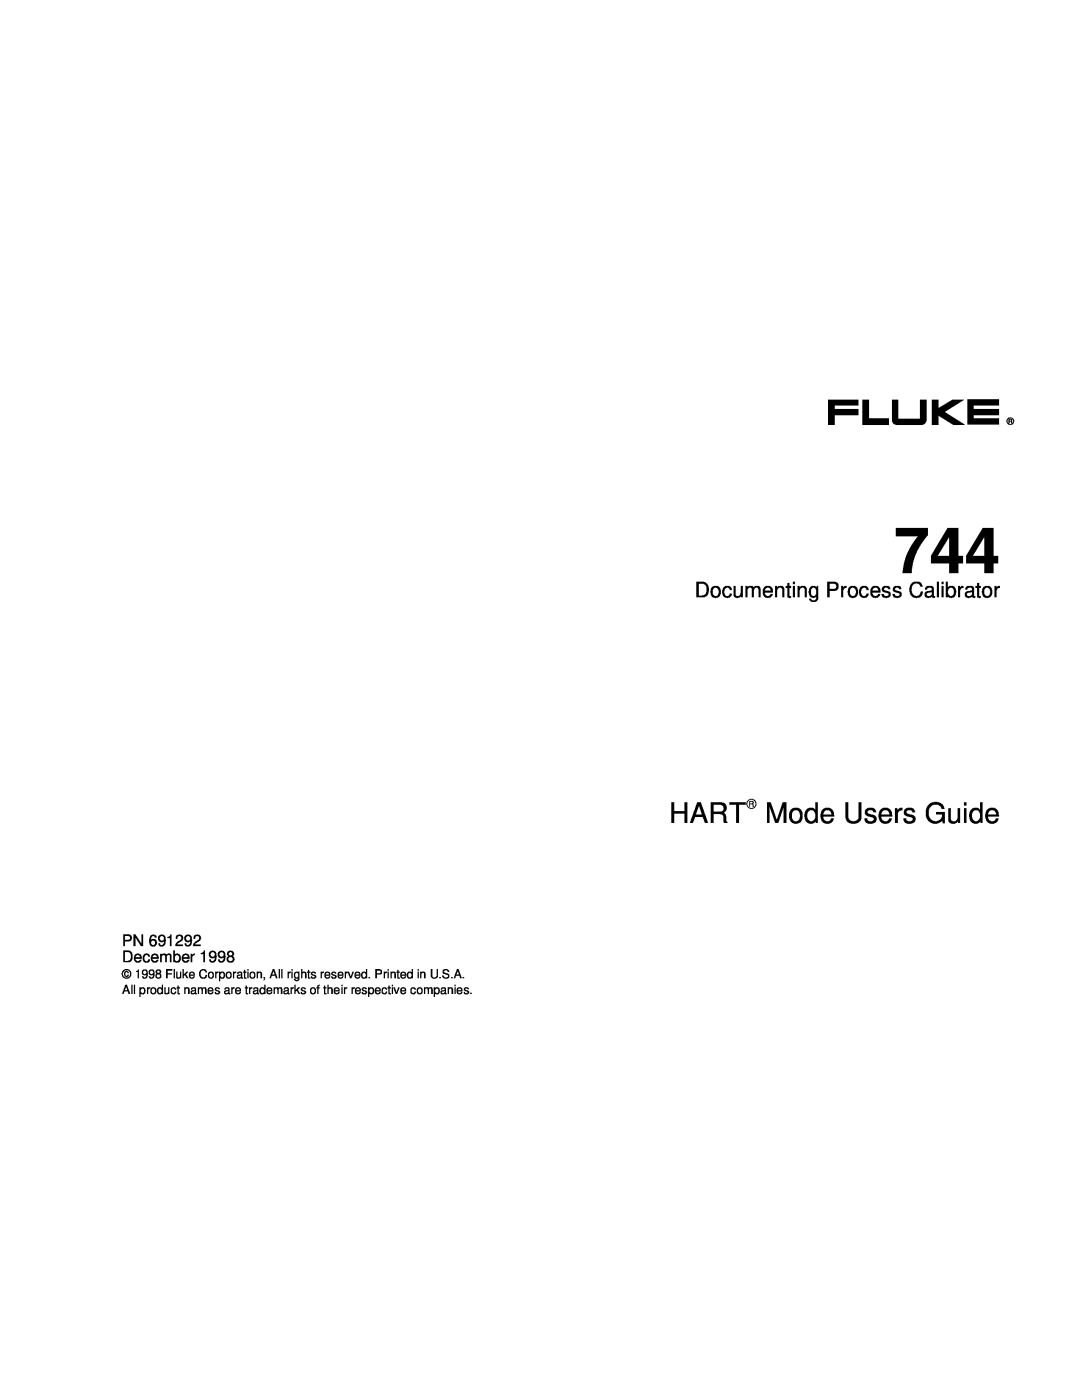 Fluke 744 manual HART Mode Users Guide, Documenting Process Calibrator 